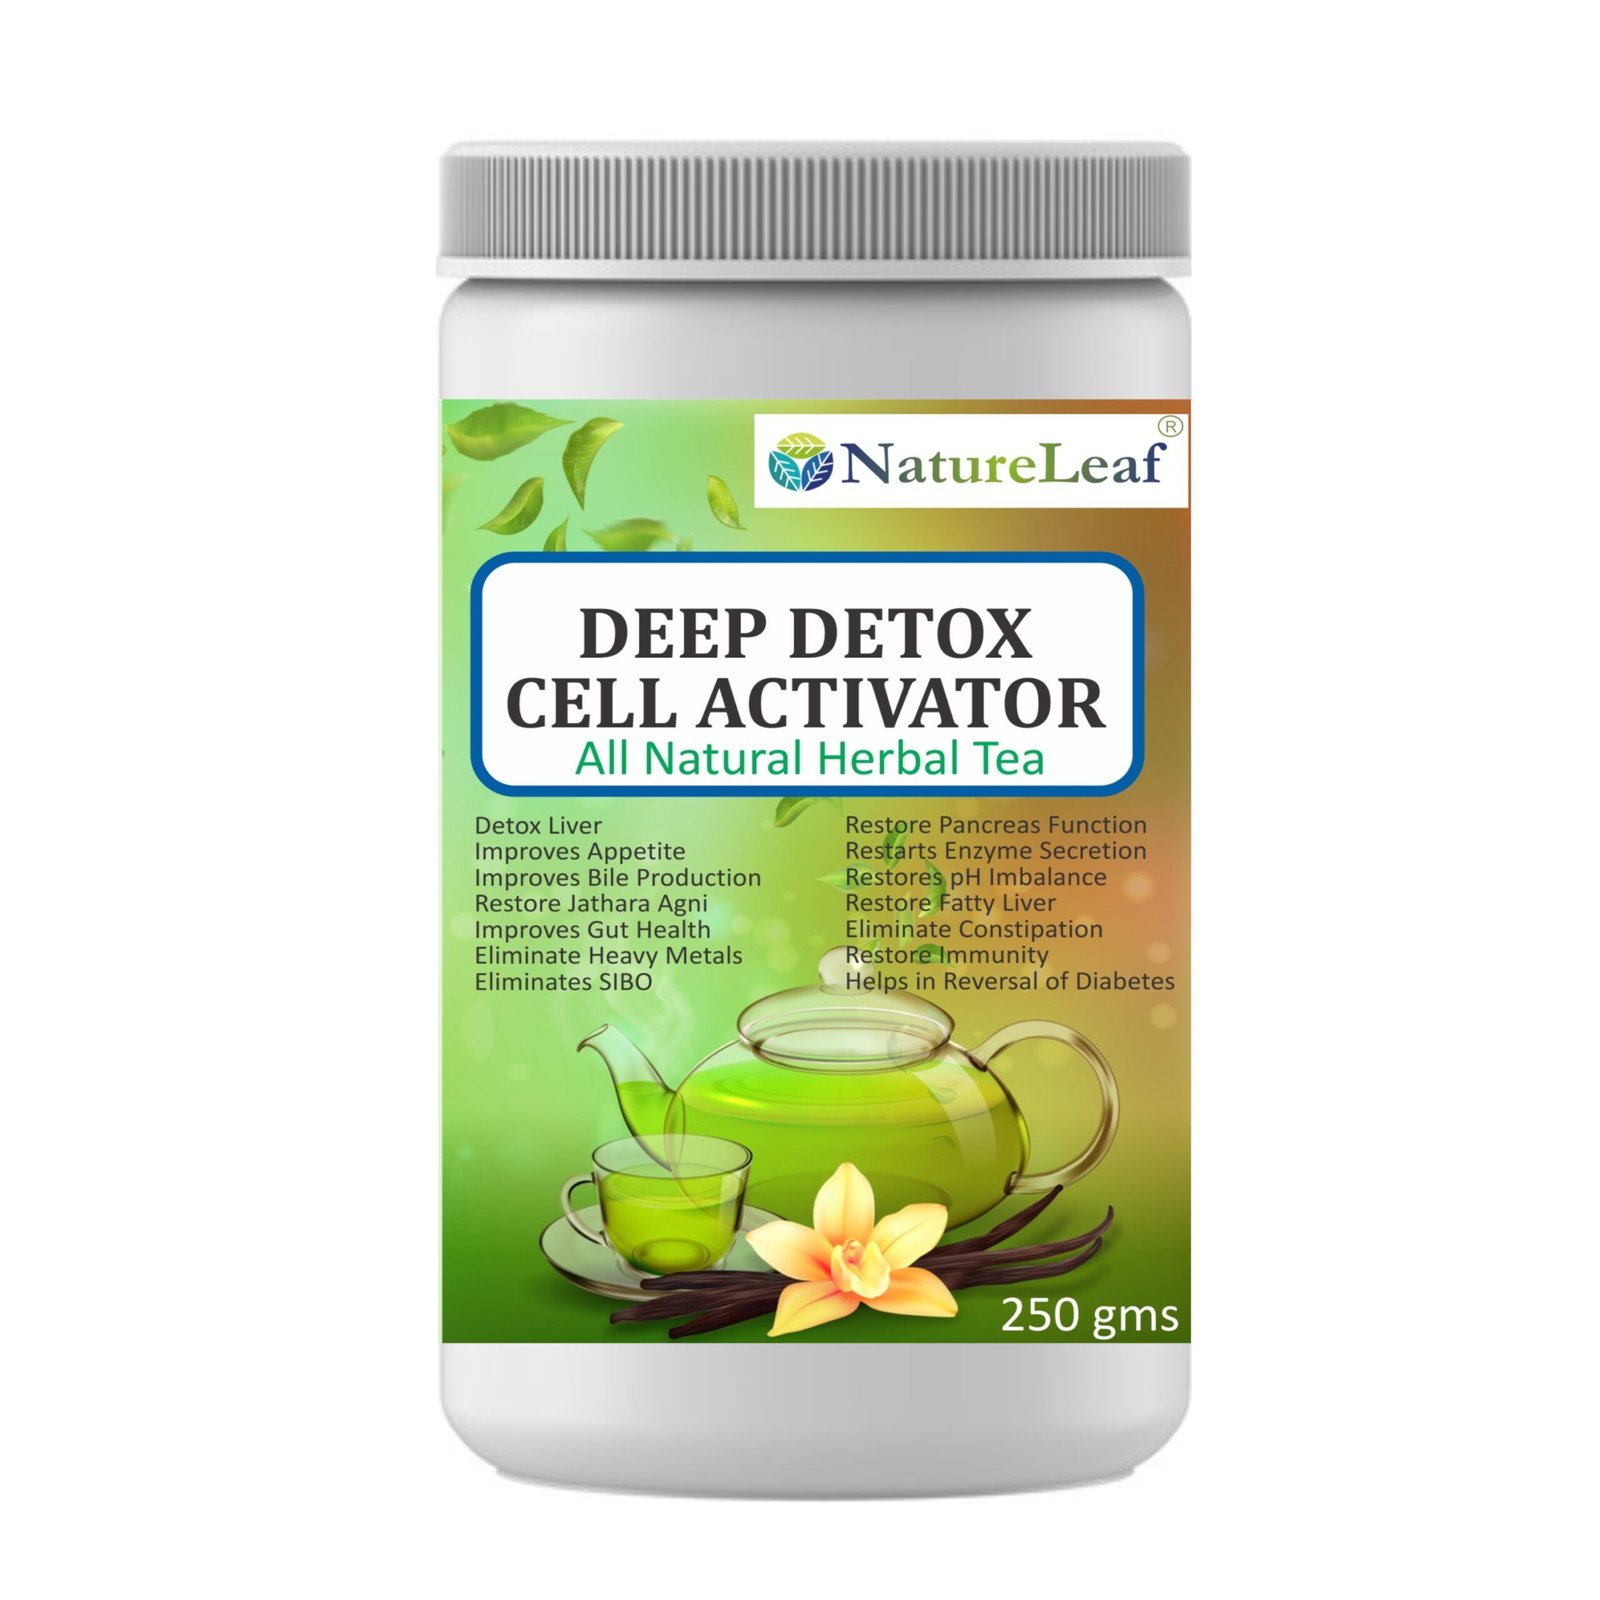 Deep Detox Cell Activator